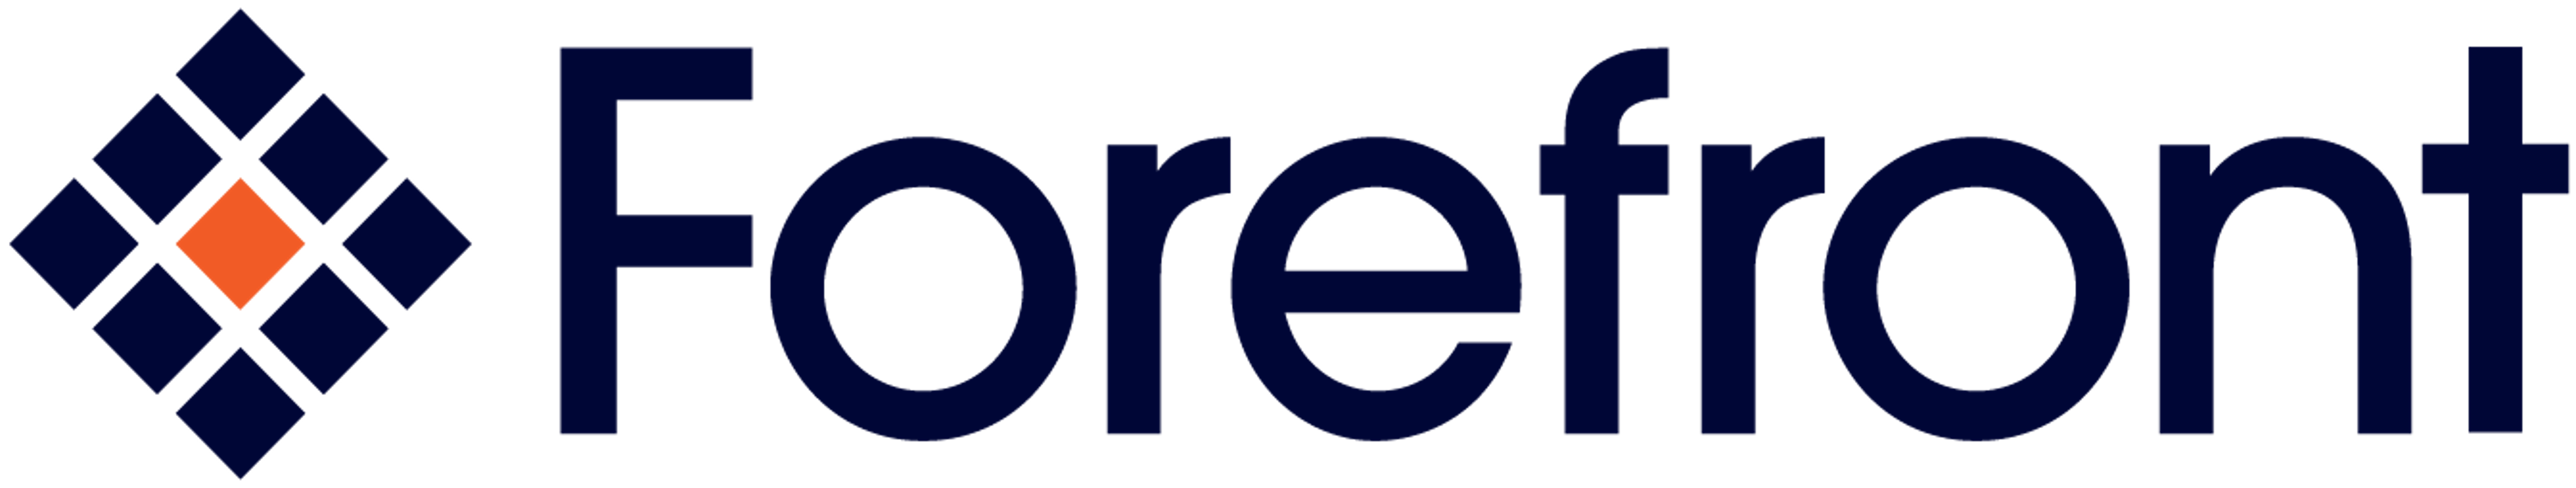 Forefront Communications logo